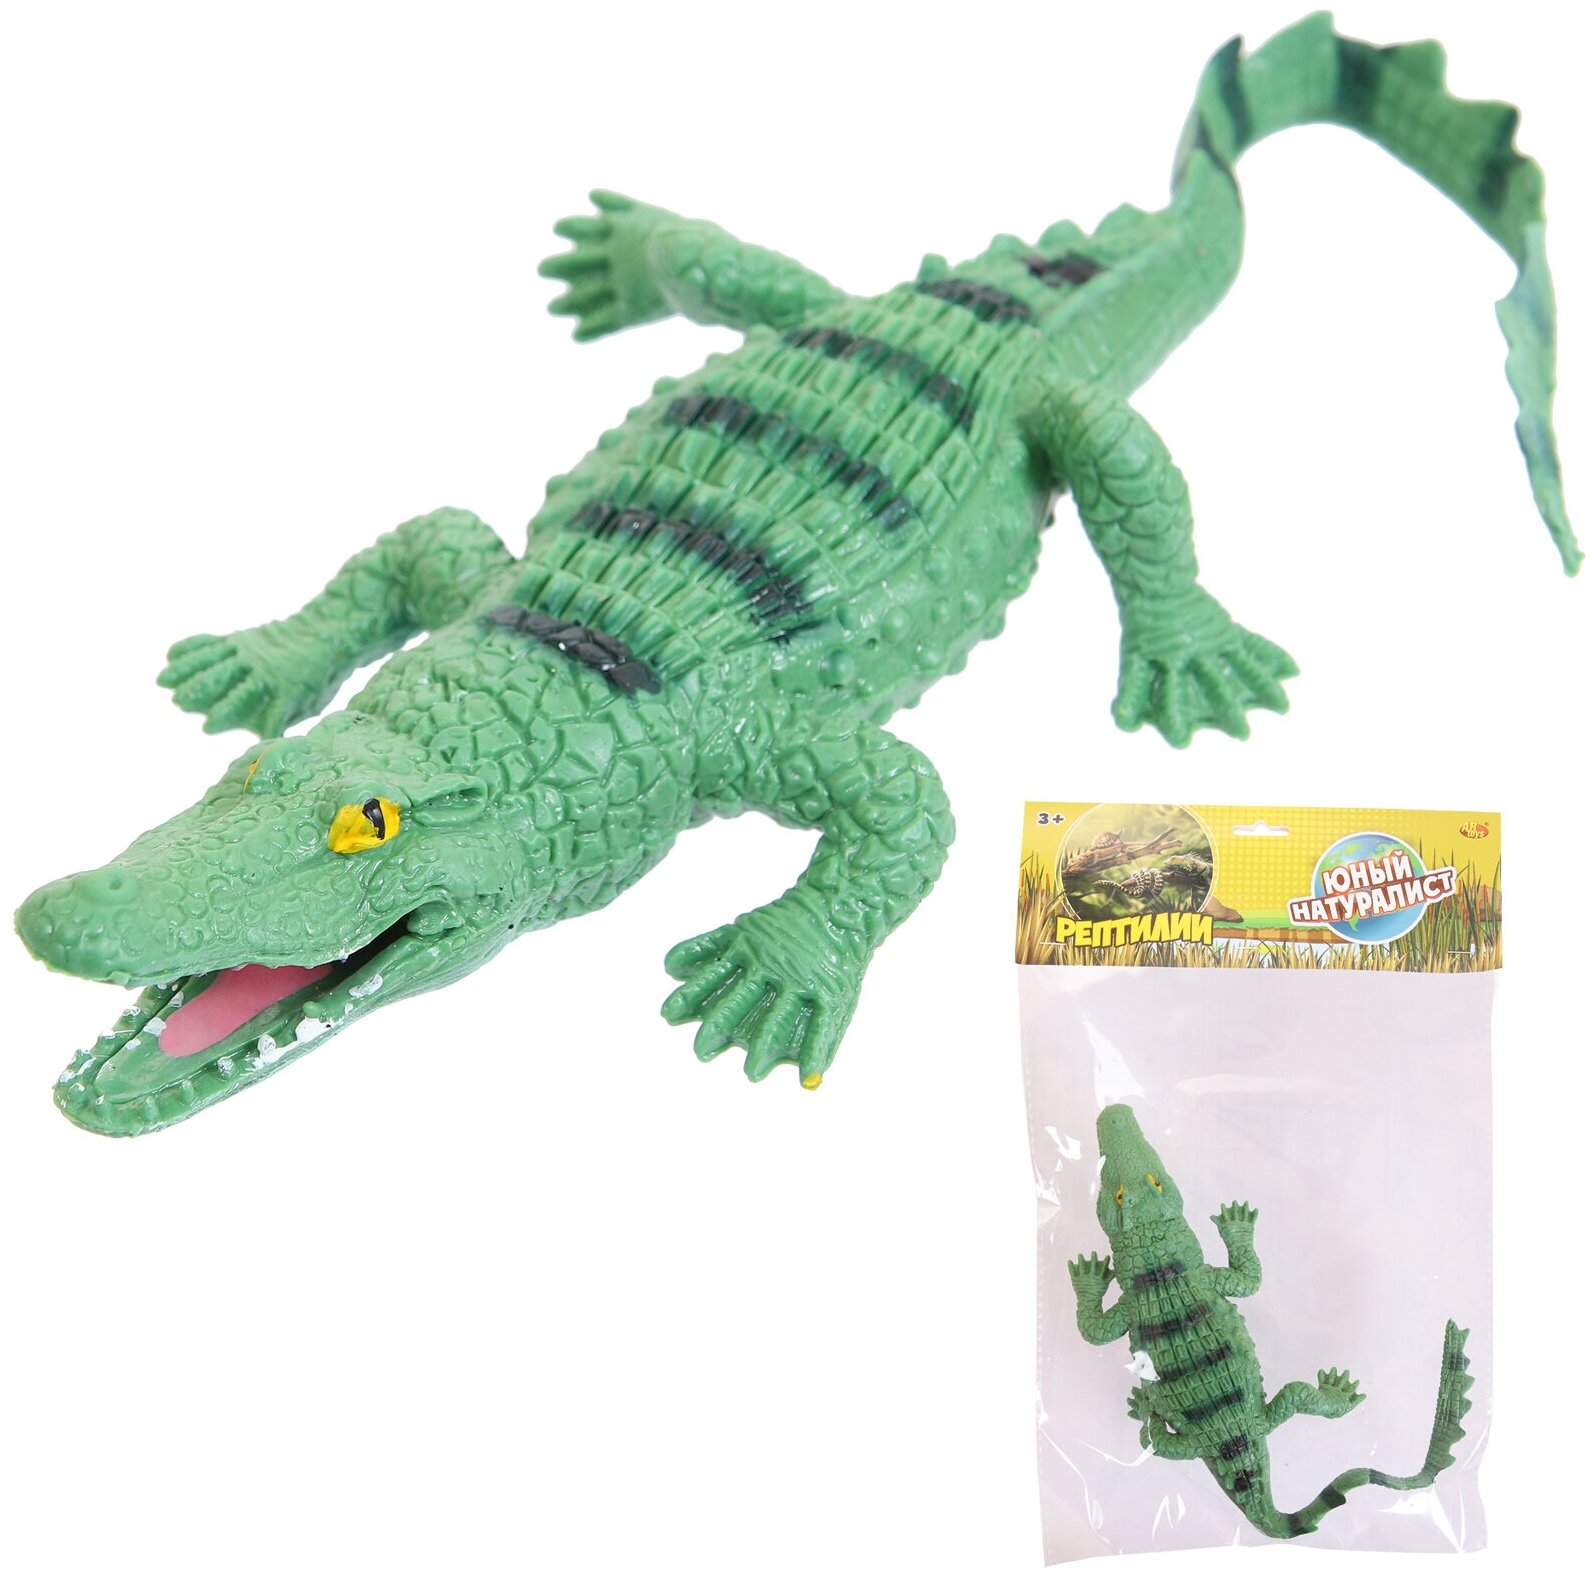 Фигурка Abtoys Юный натуралист Рептилии Крокодил (зеленый), термопластичная резина